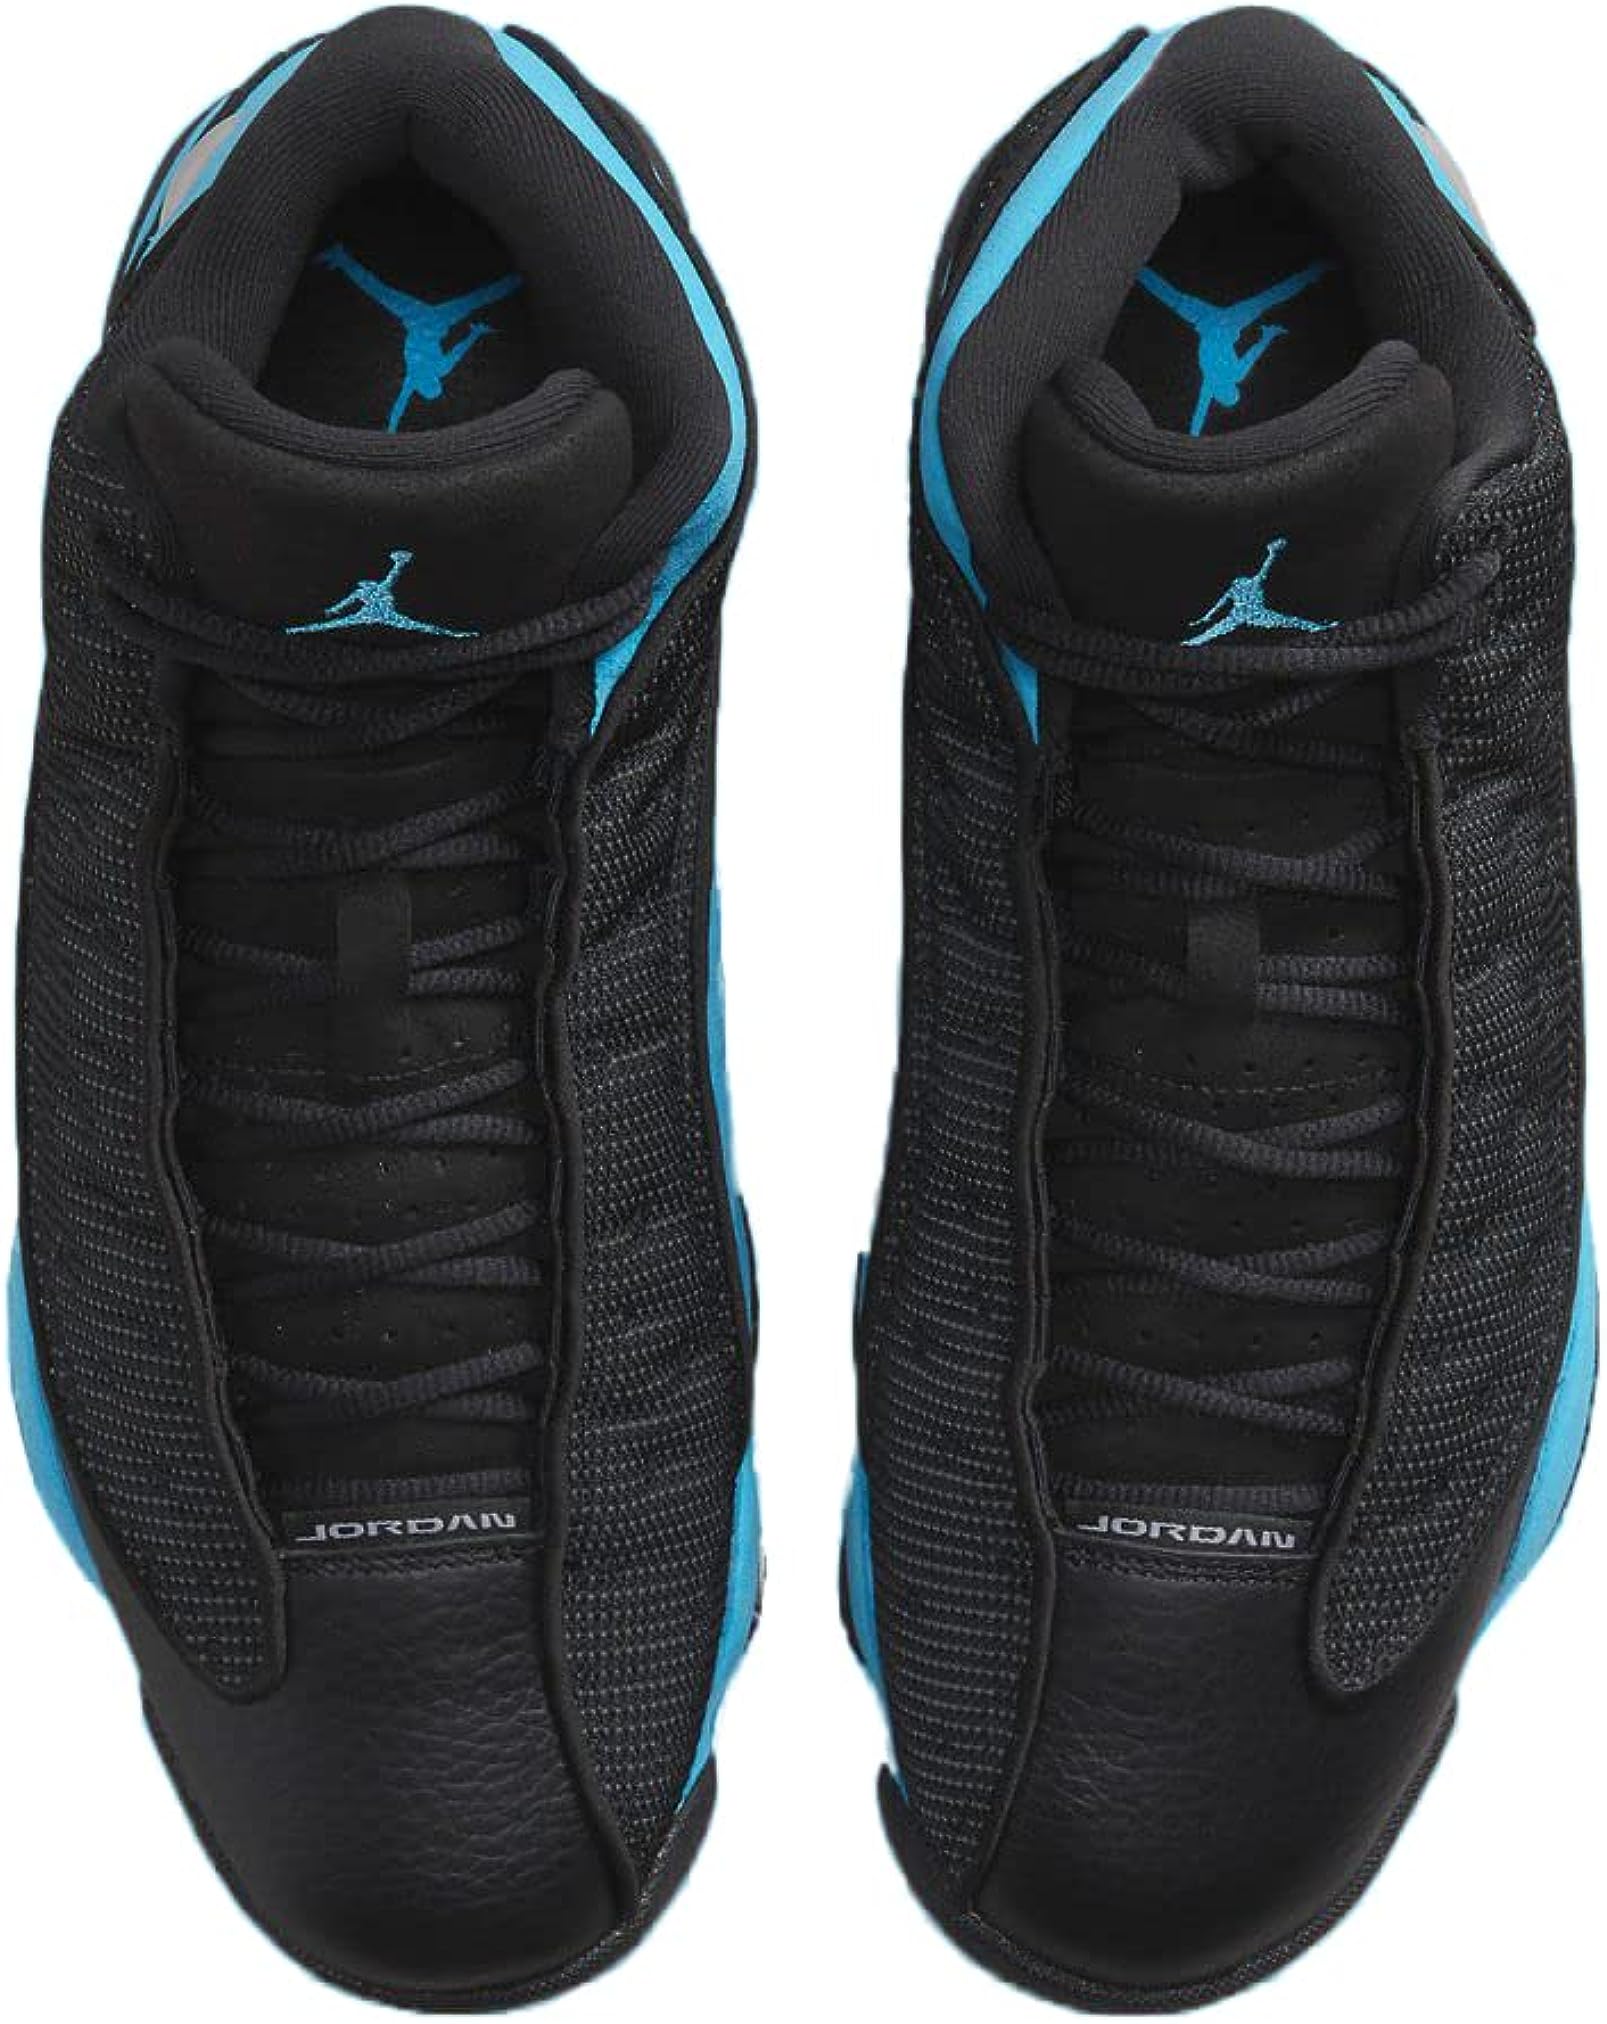 Jordan Mens Air 13 Retro Shoes